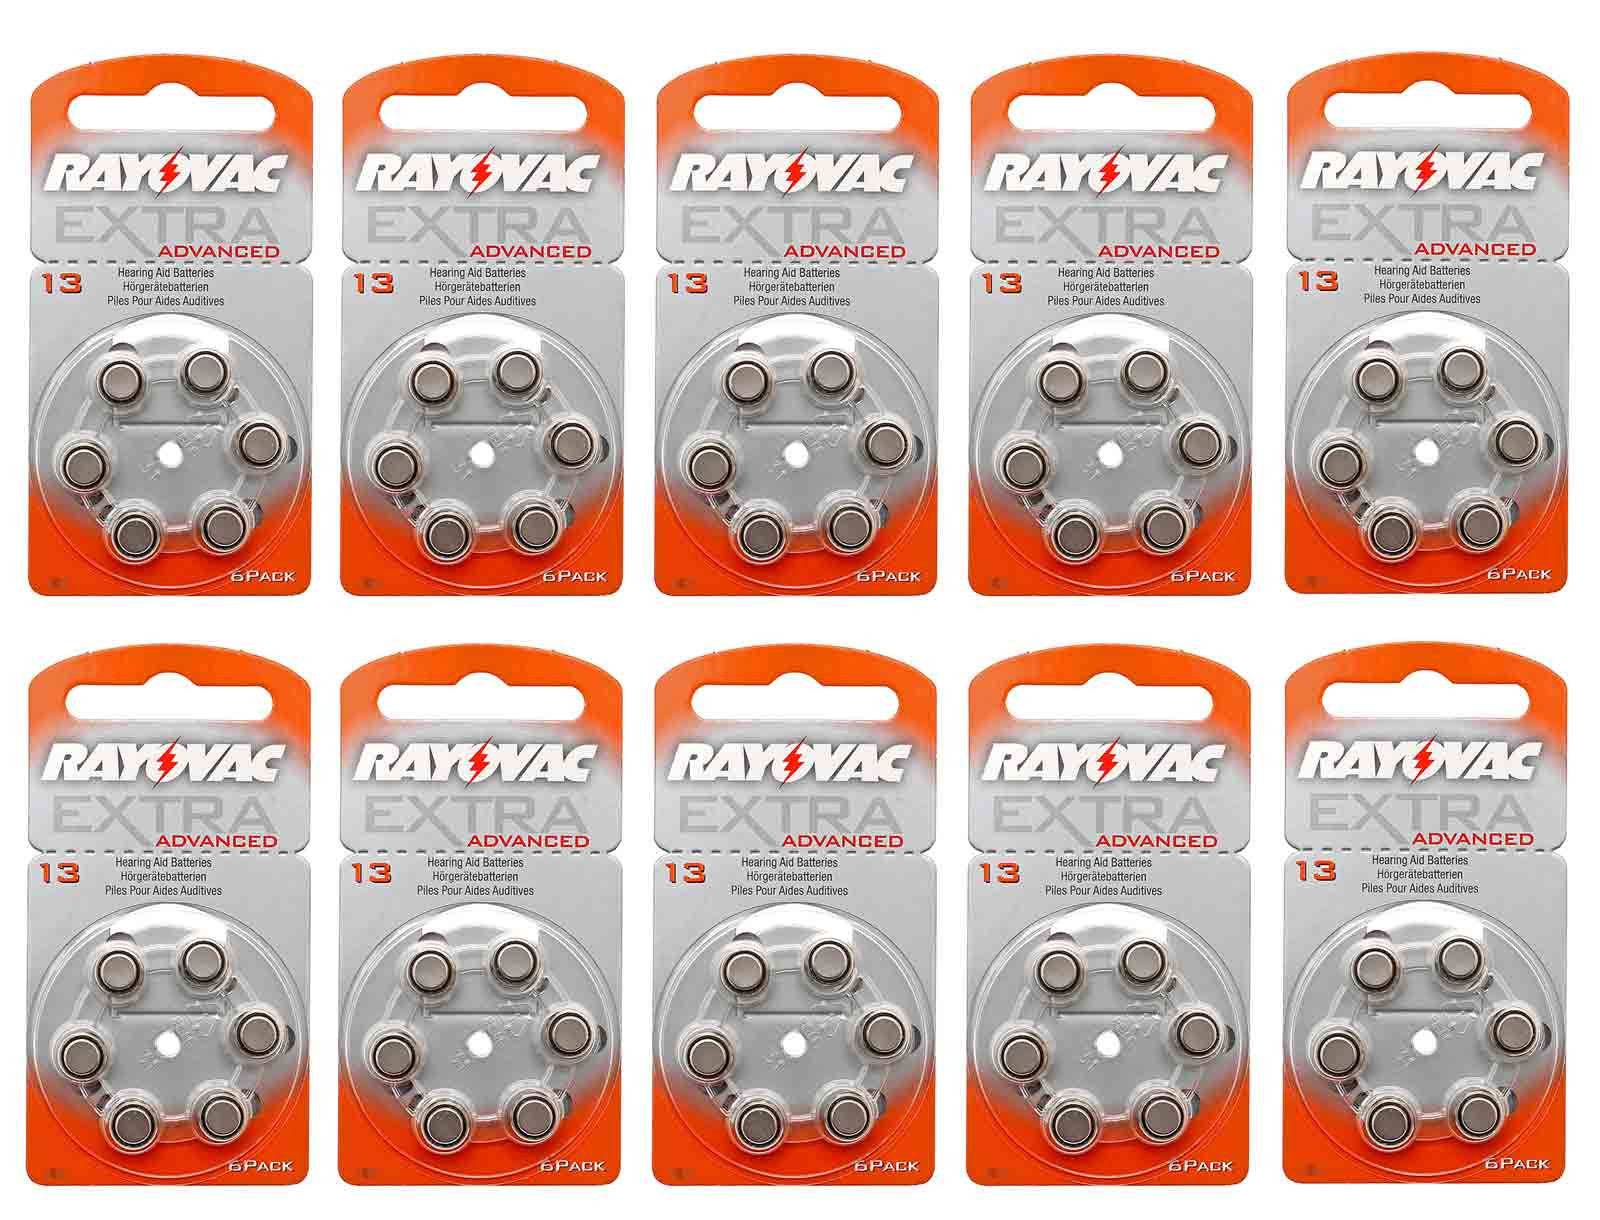 BB 08.18 - 10x 6er Pack Rayovac Extra Advanced Knopfzelle Batterie Typ13, PR48, für Hörgeräte, hearing aid, 1,4V